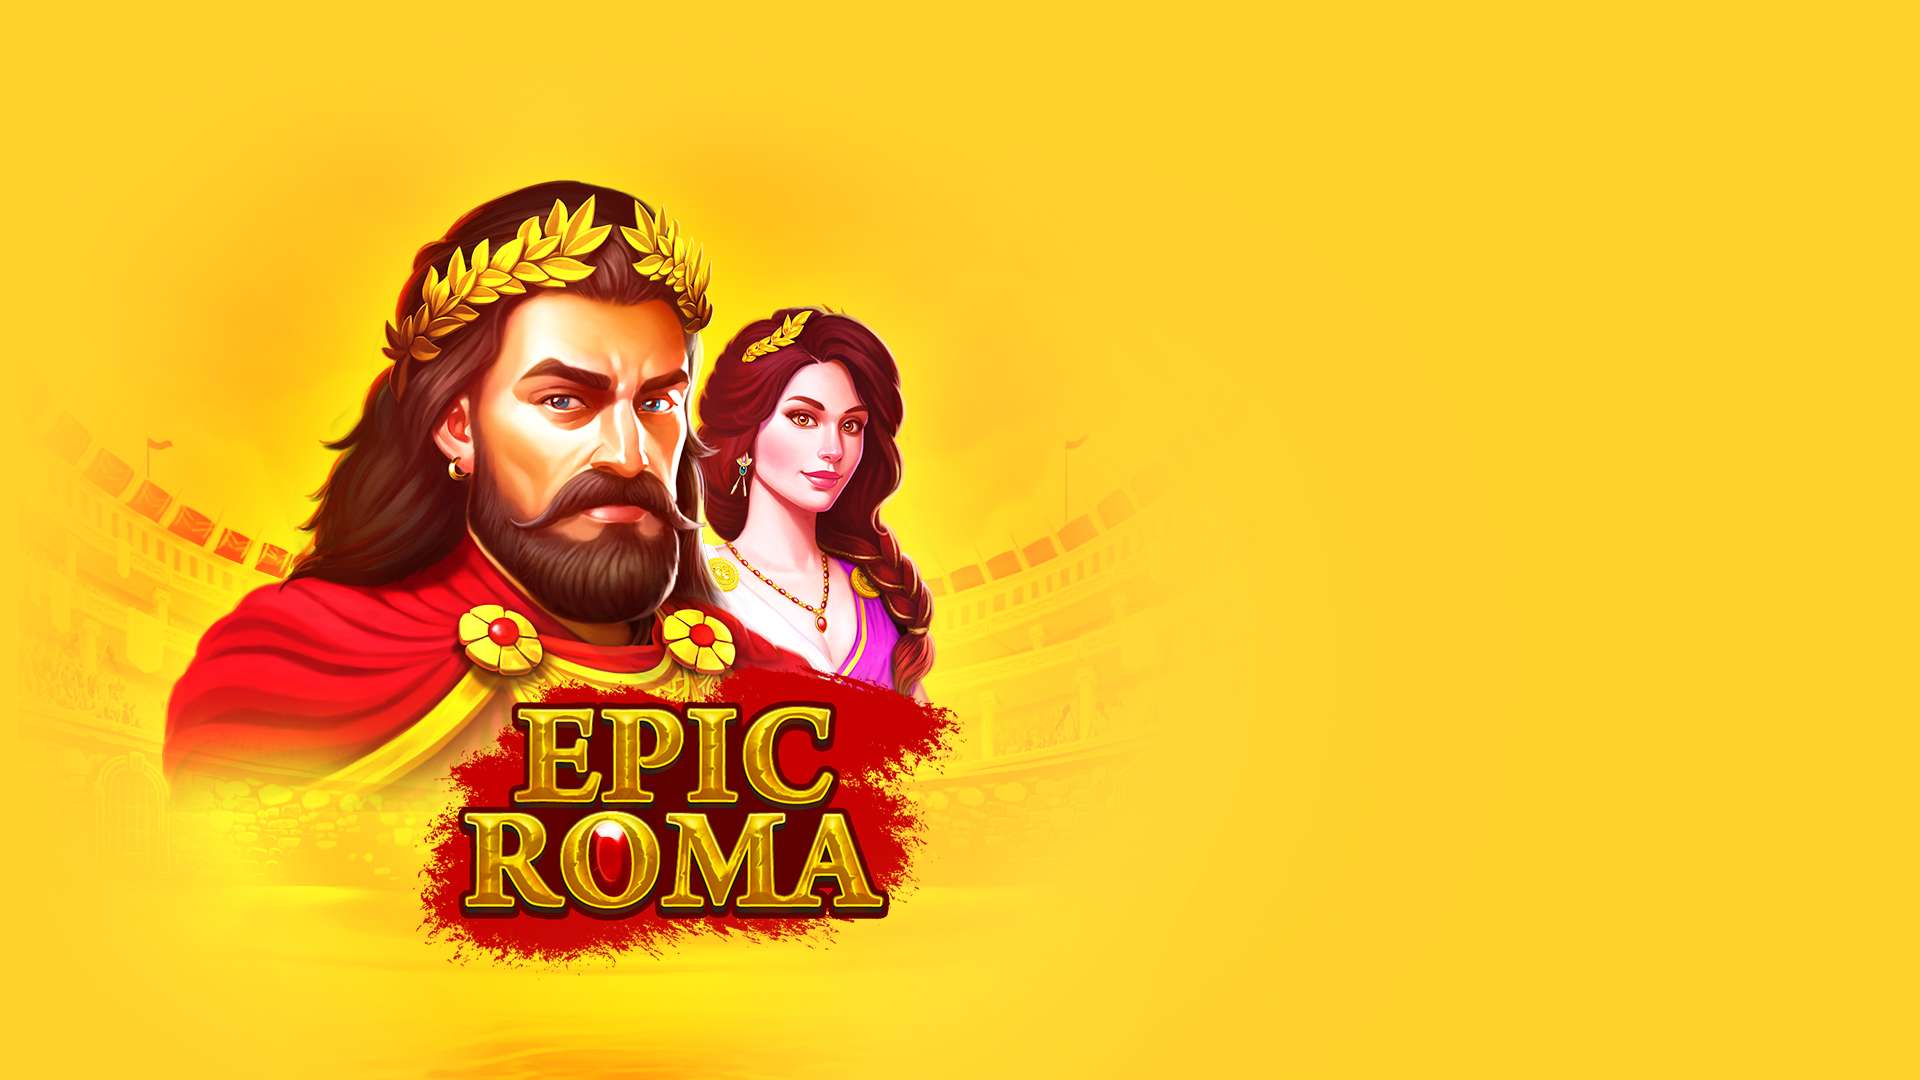 Cosmo Epic Roma, Gladiator Logo, Ancient Roman Era Of Coliseum Fights, Online Social Casino, Free Slots Games